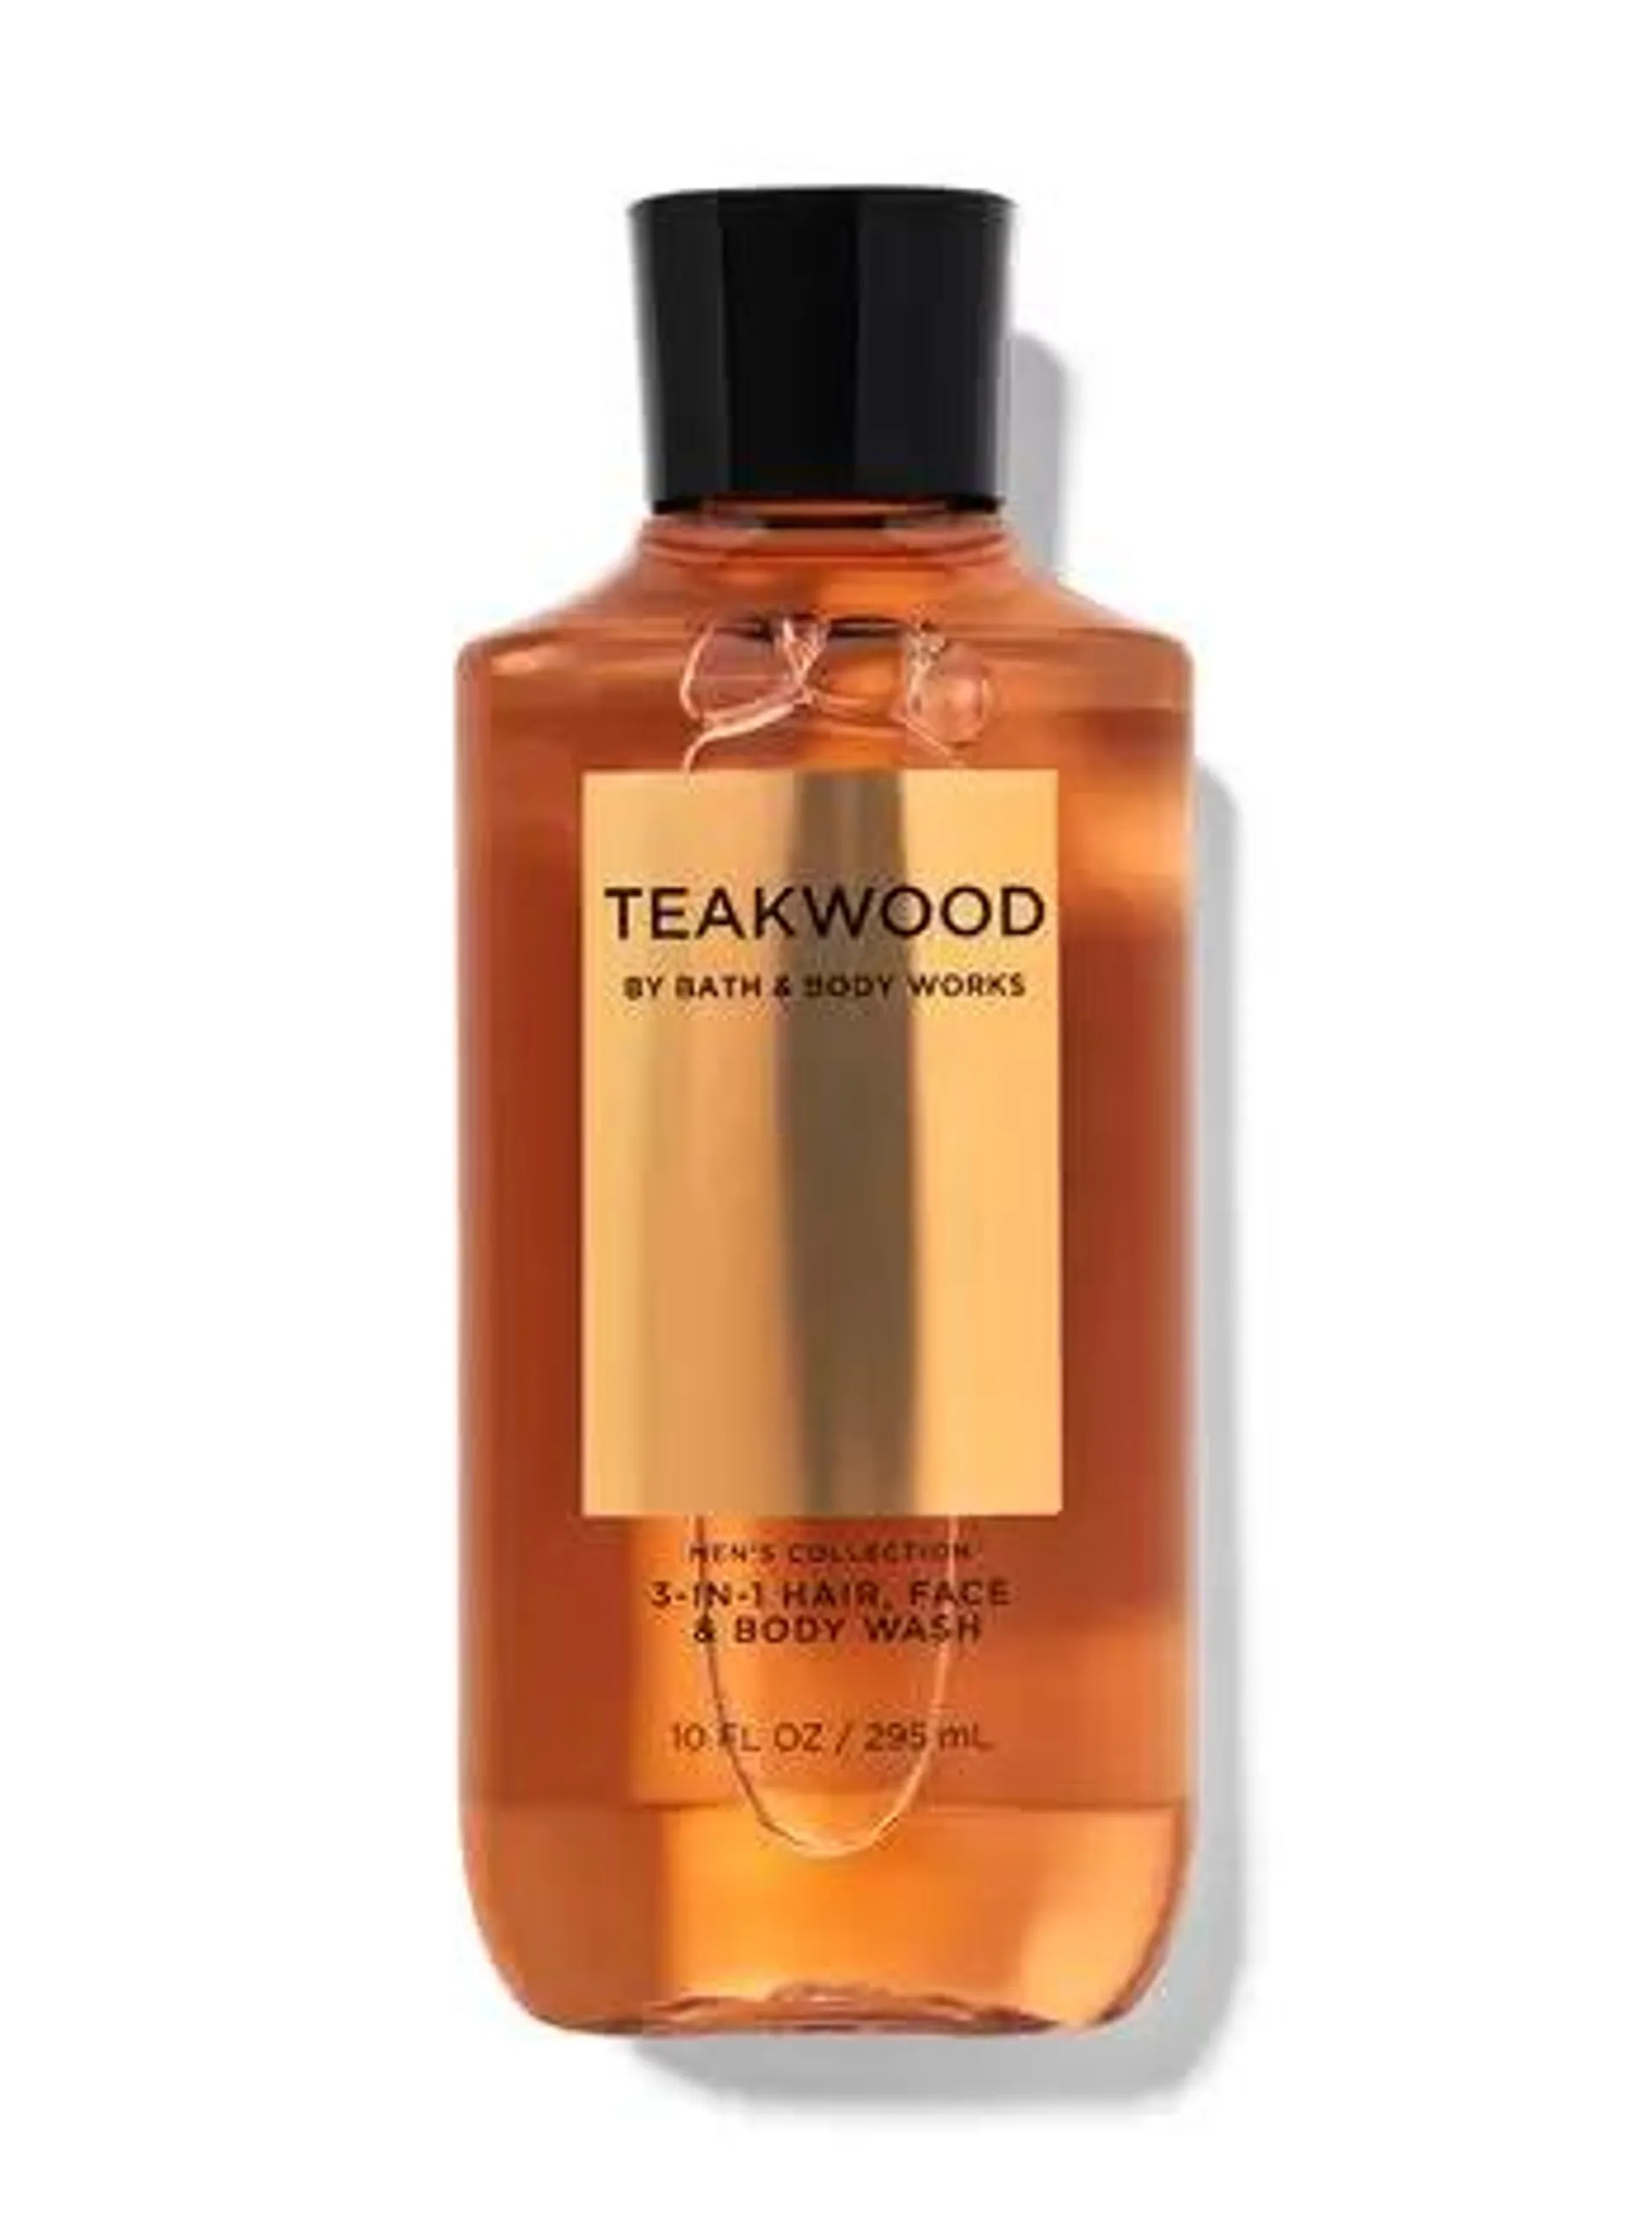 Teakwood 3-in-1 Hair, Face & Body Wash